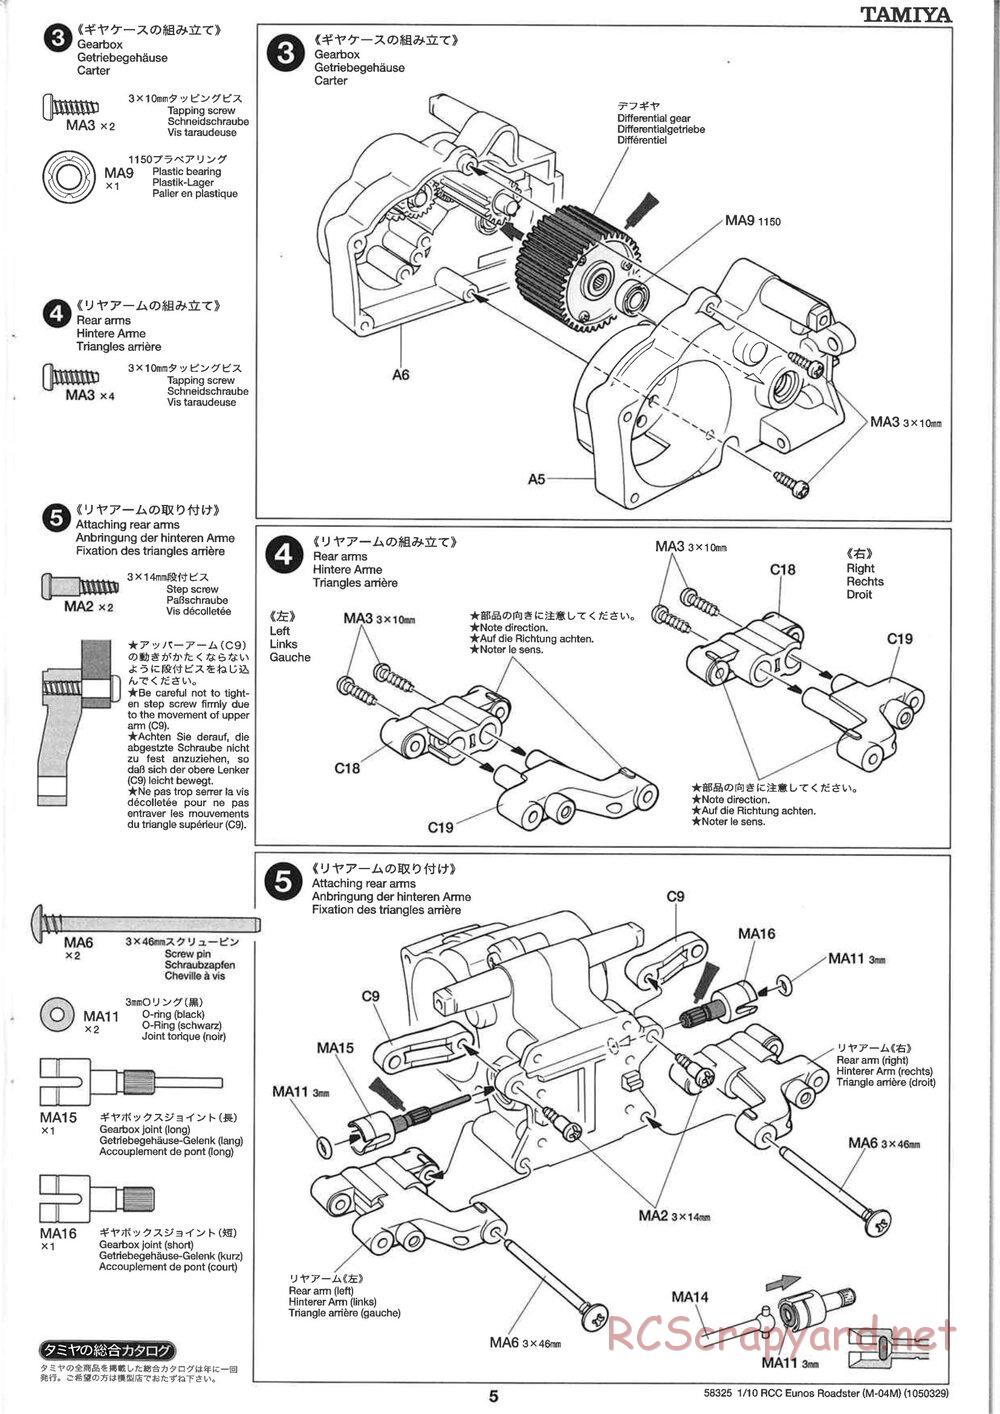 Tamiya - Eunos Roadster - M04M Chassis - Manual - Page 5